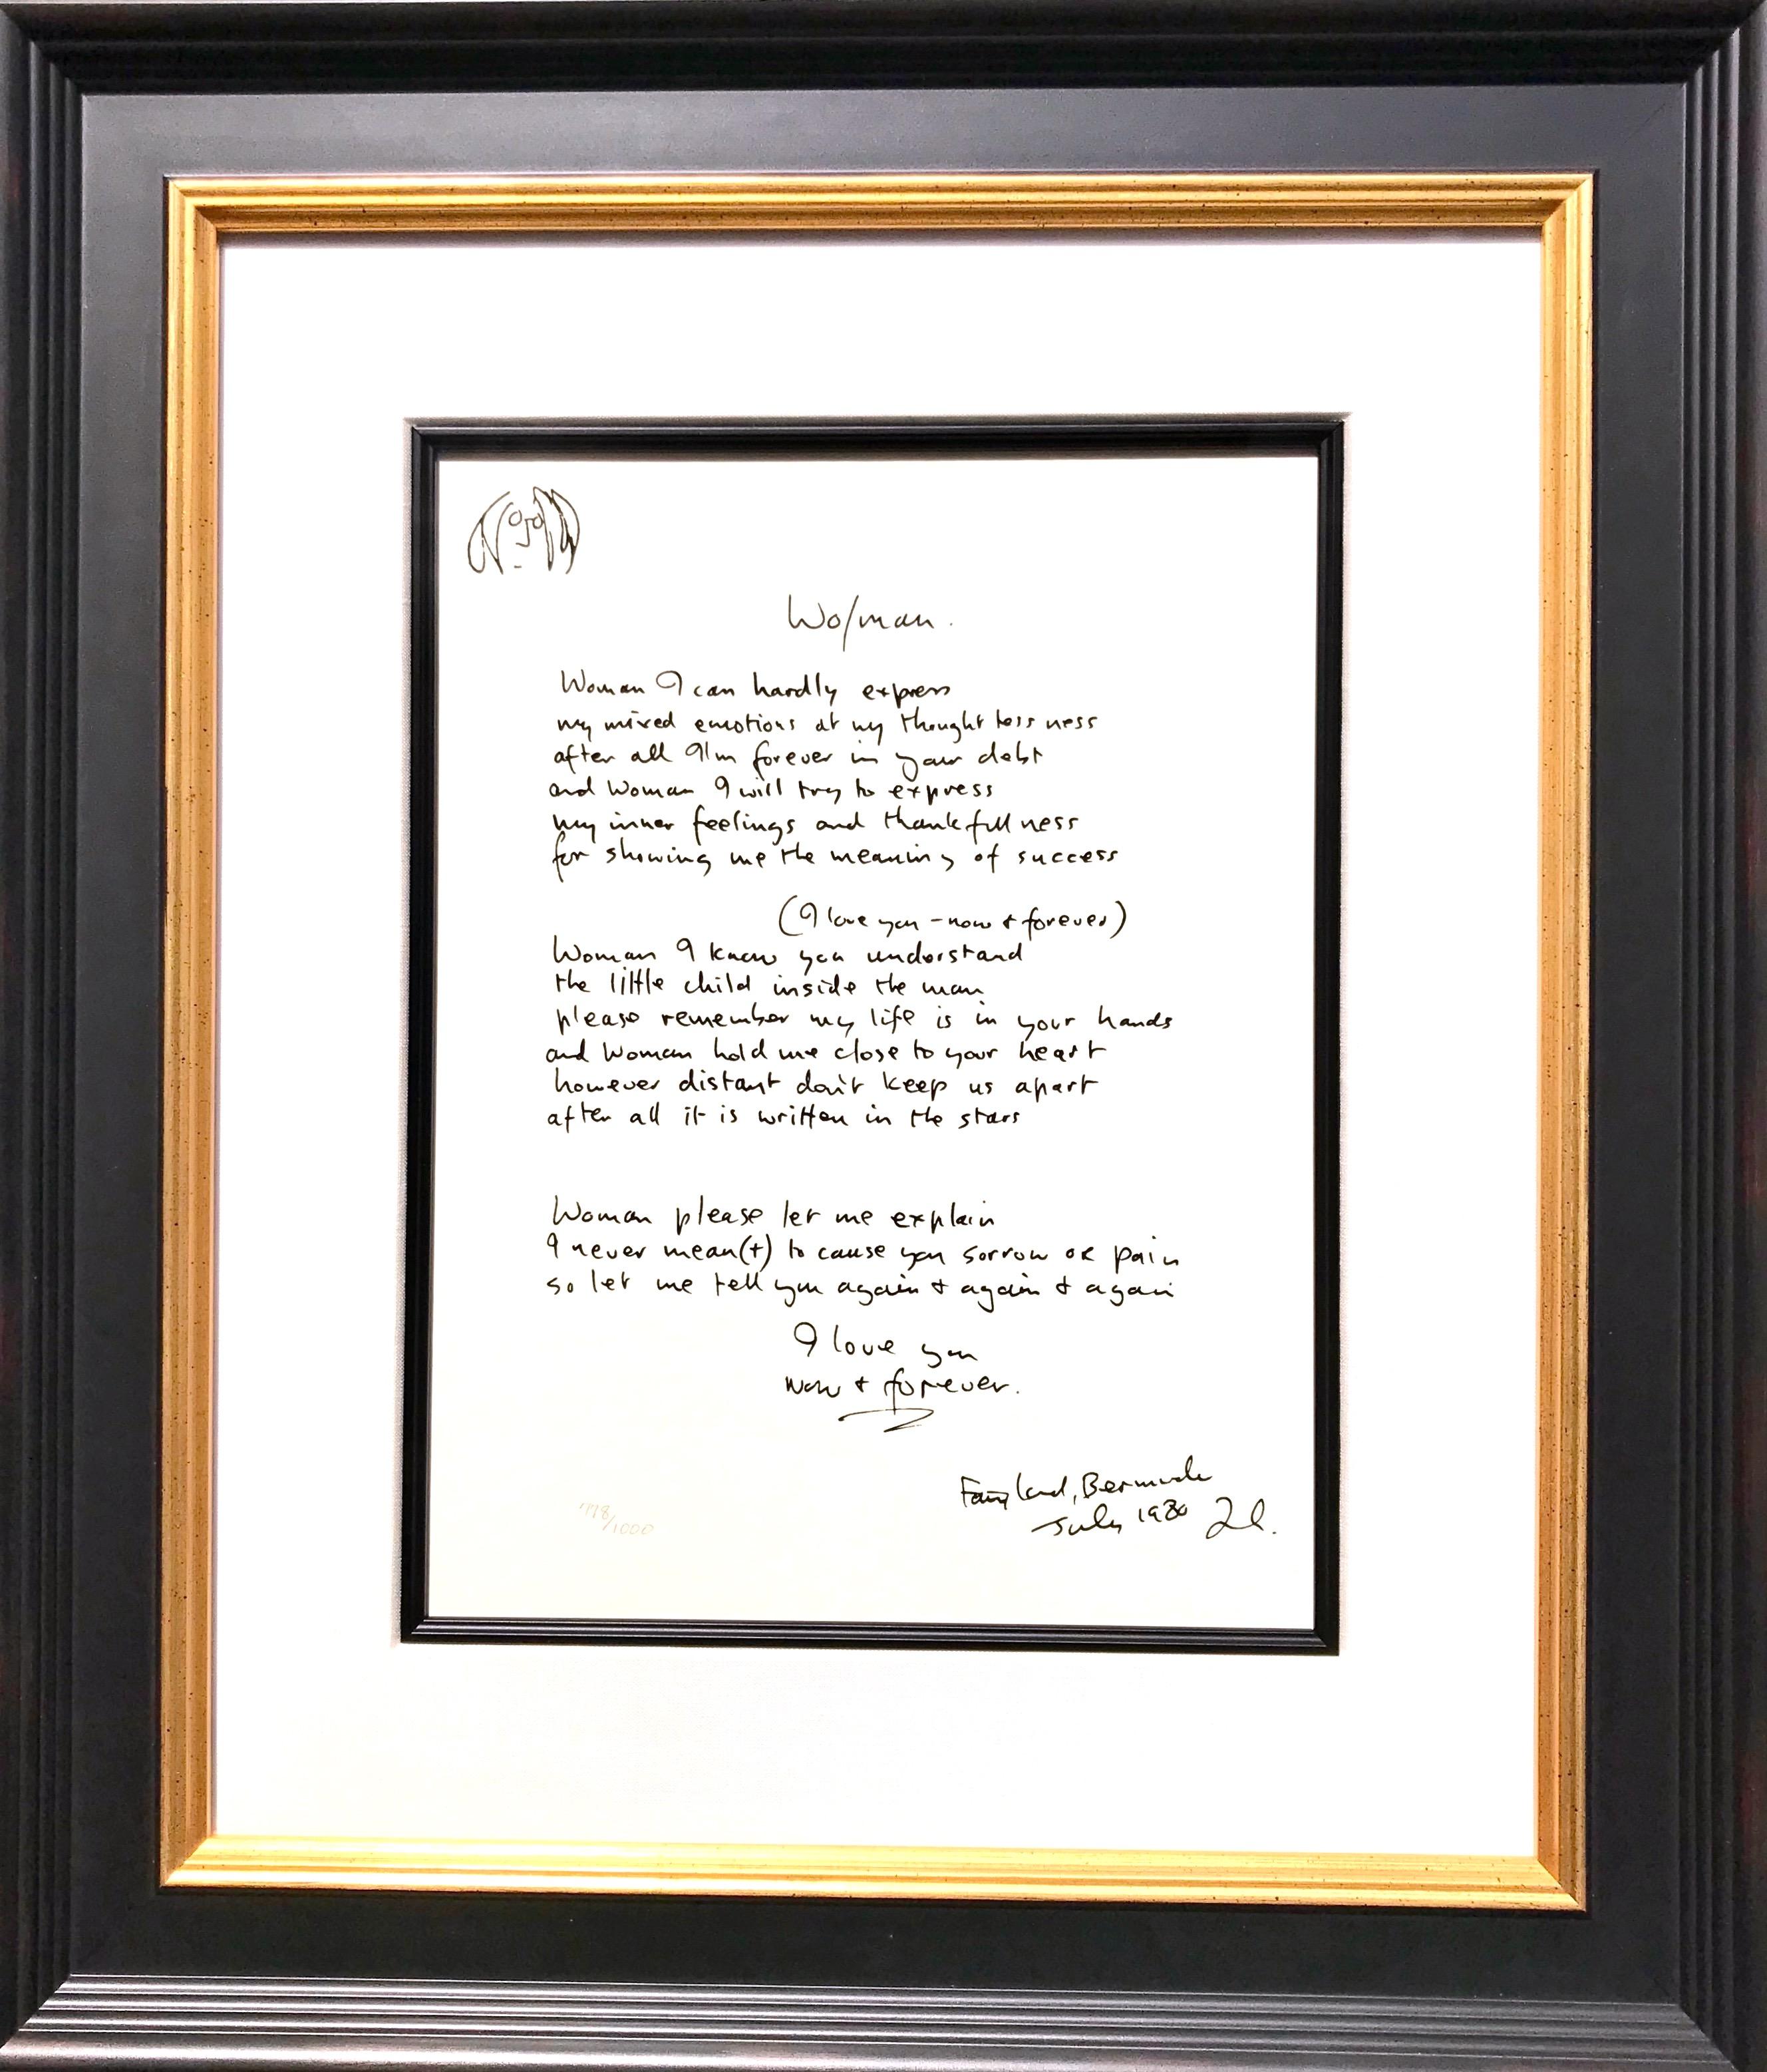 John Lennon Print - "Woman" Framed Limited Edition Hand Written Lyrics